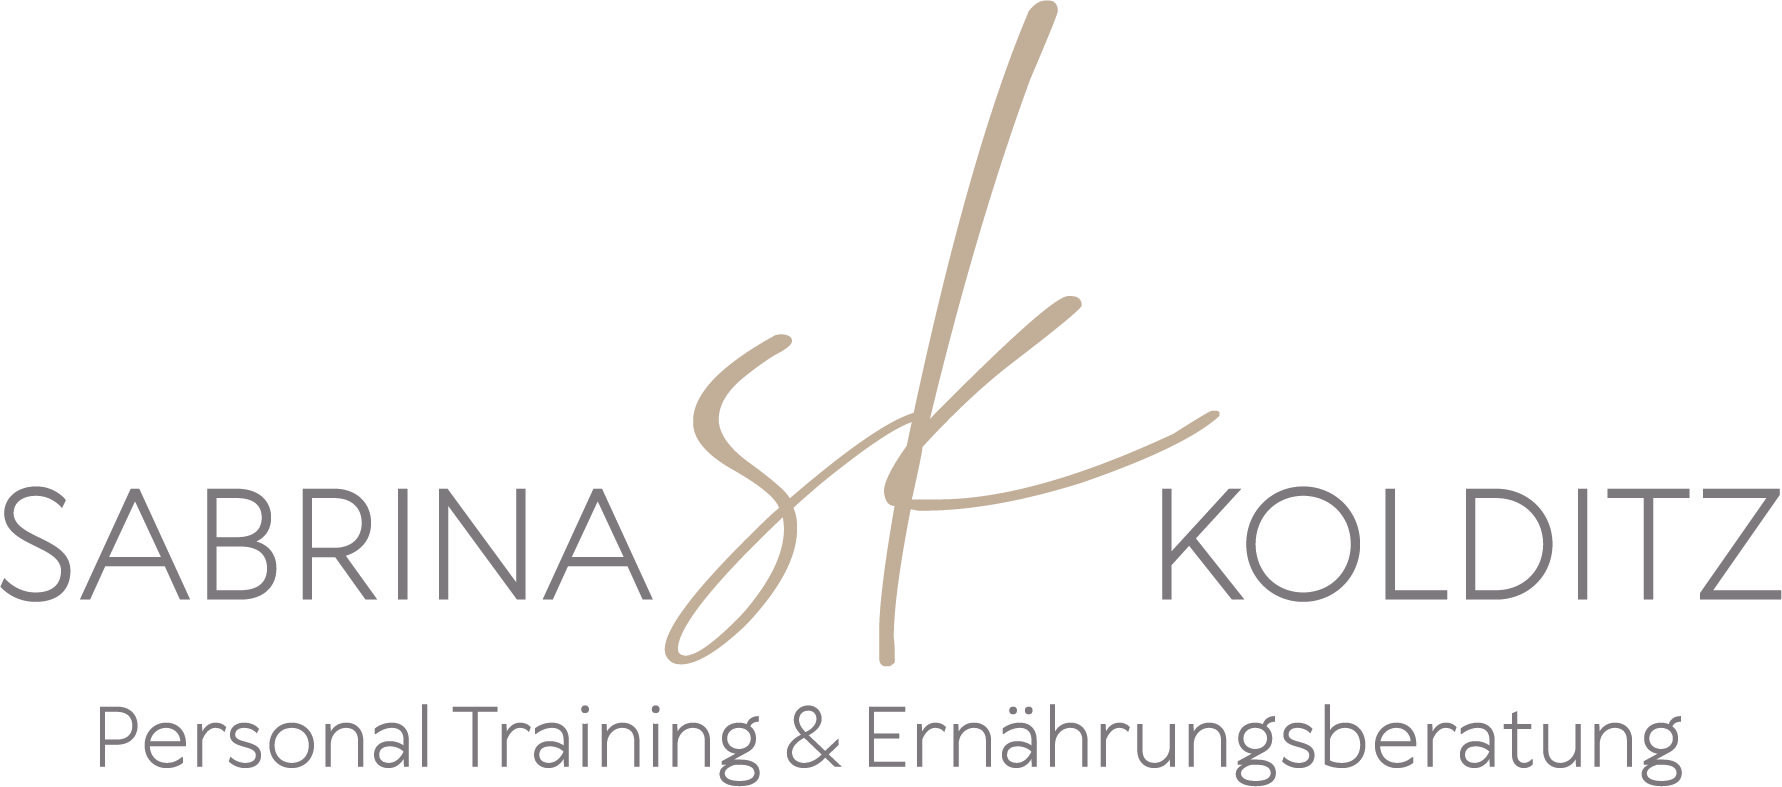 Sabrina Kolditz – Personal Training & Ernährungsberatung